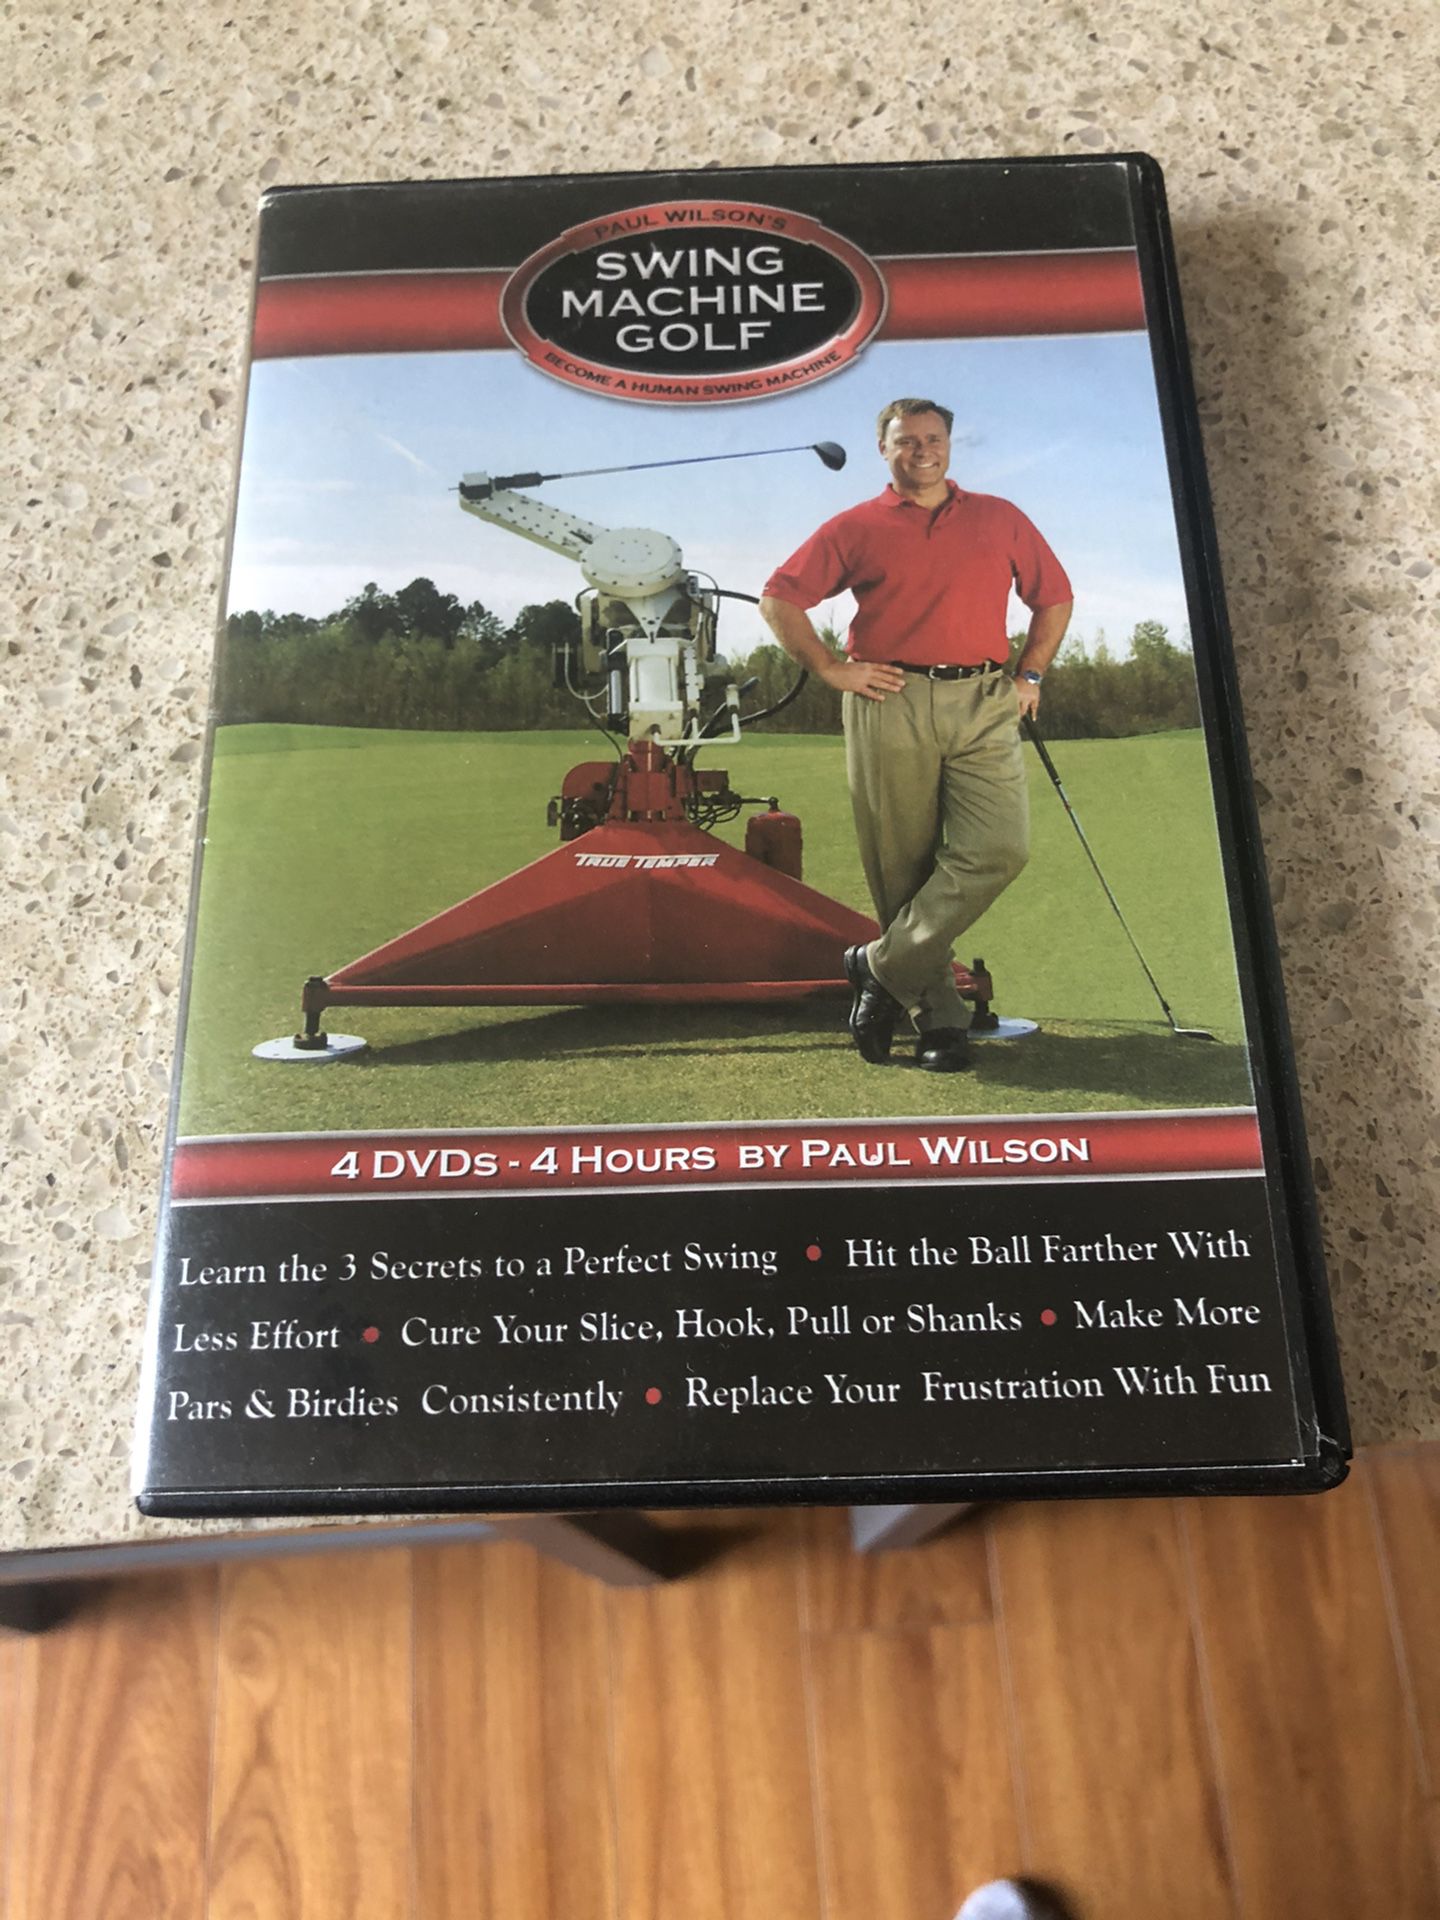 Swing machine gold dvd instructional